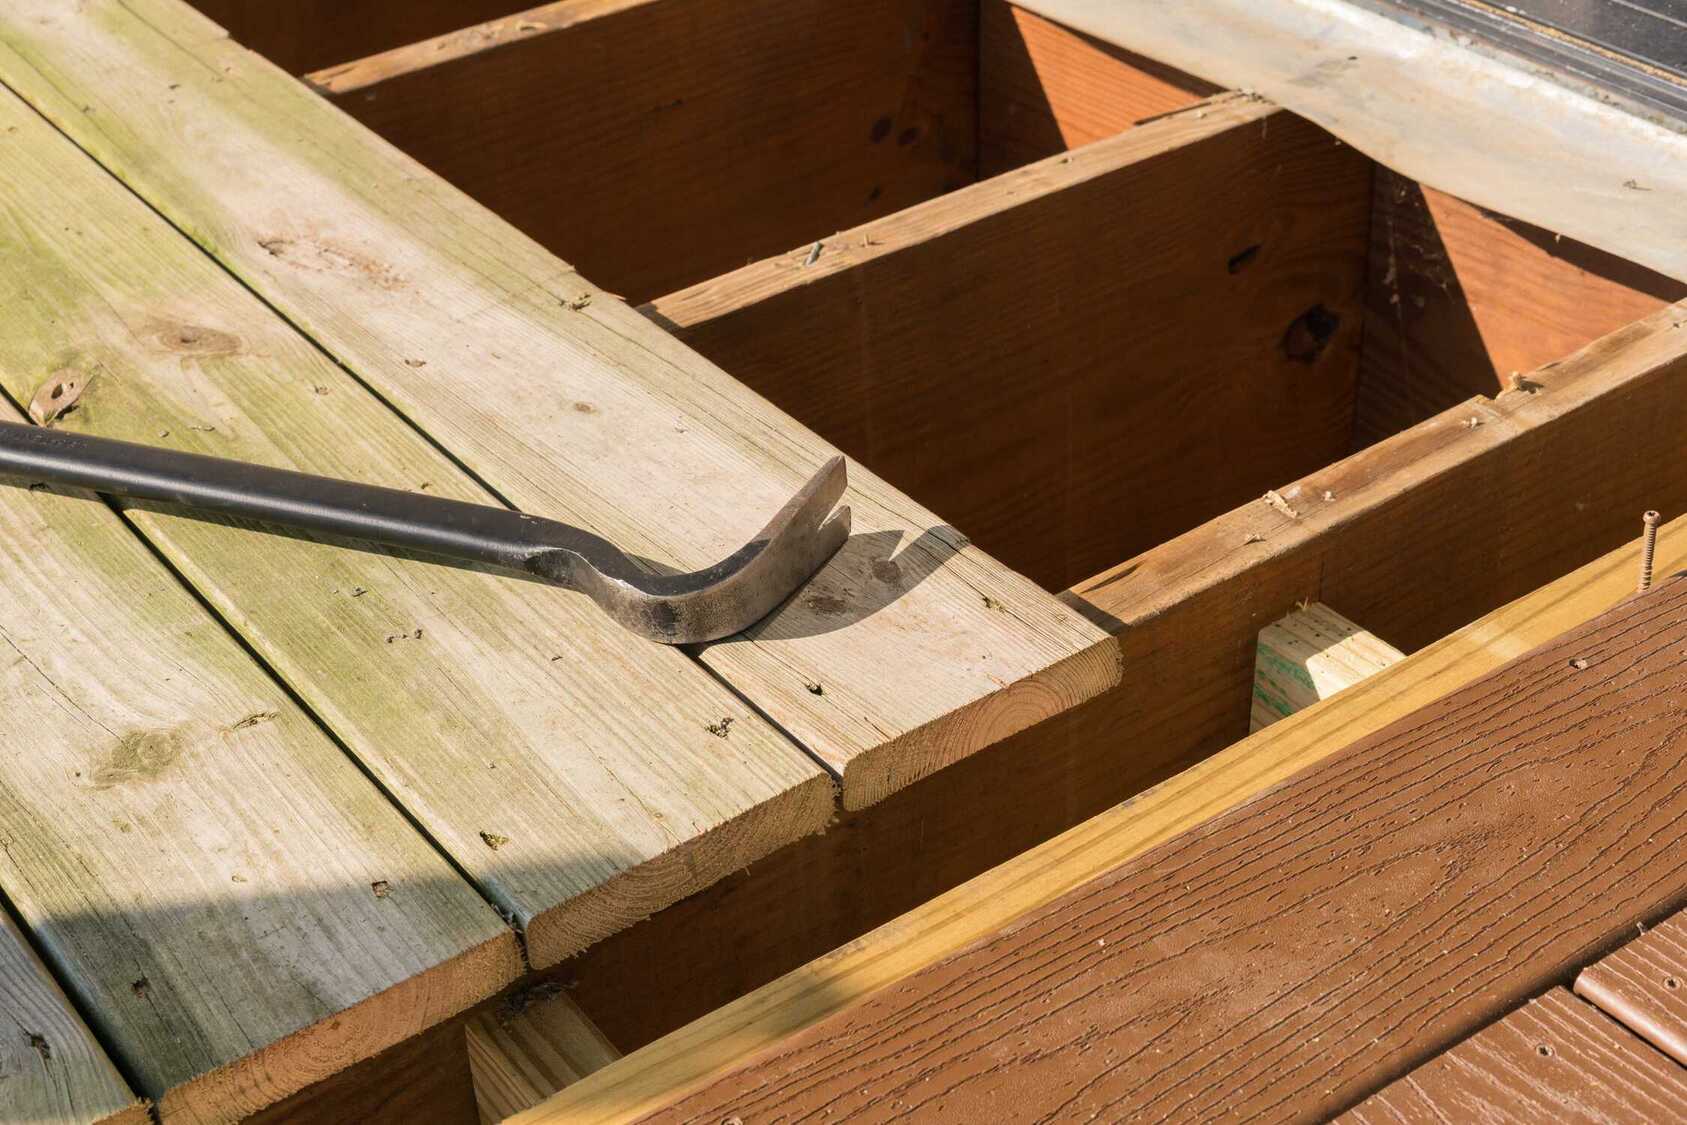 old wooden deck being repaired by Birmingham Decks crew